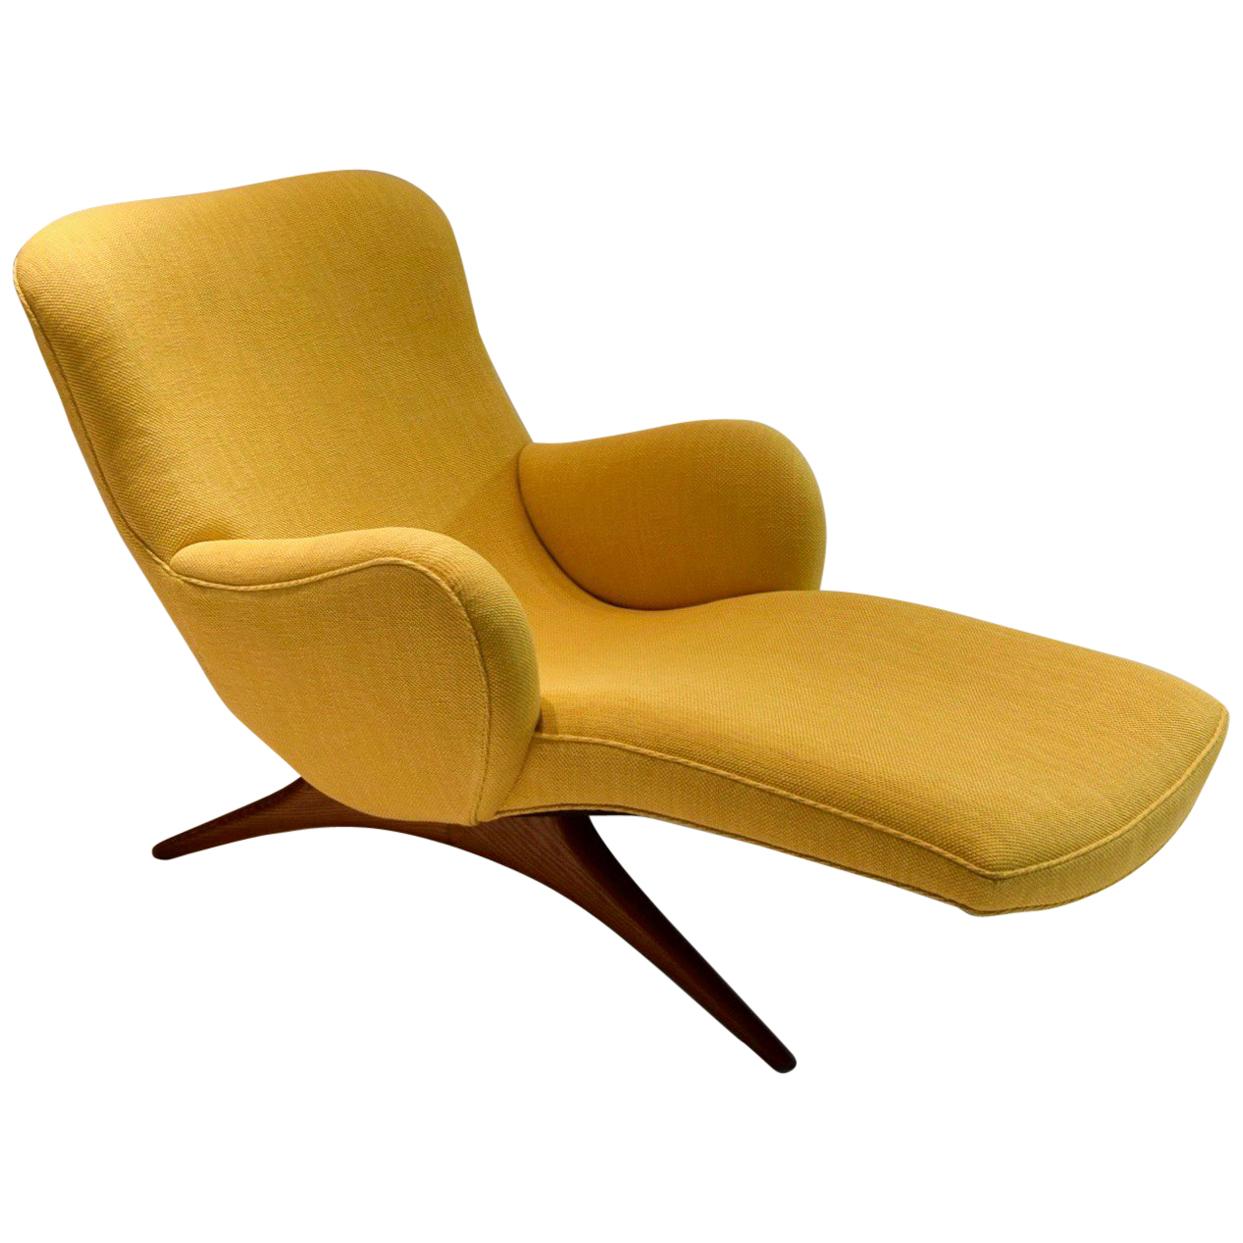 https://a.1stdibscdn.com/original-contour-lounge-chair-by-vladimir-kagan-usa-circa-1955-for-sale/1121189/f_119611411536580139130/11961141_master.jpg